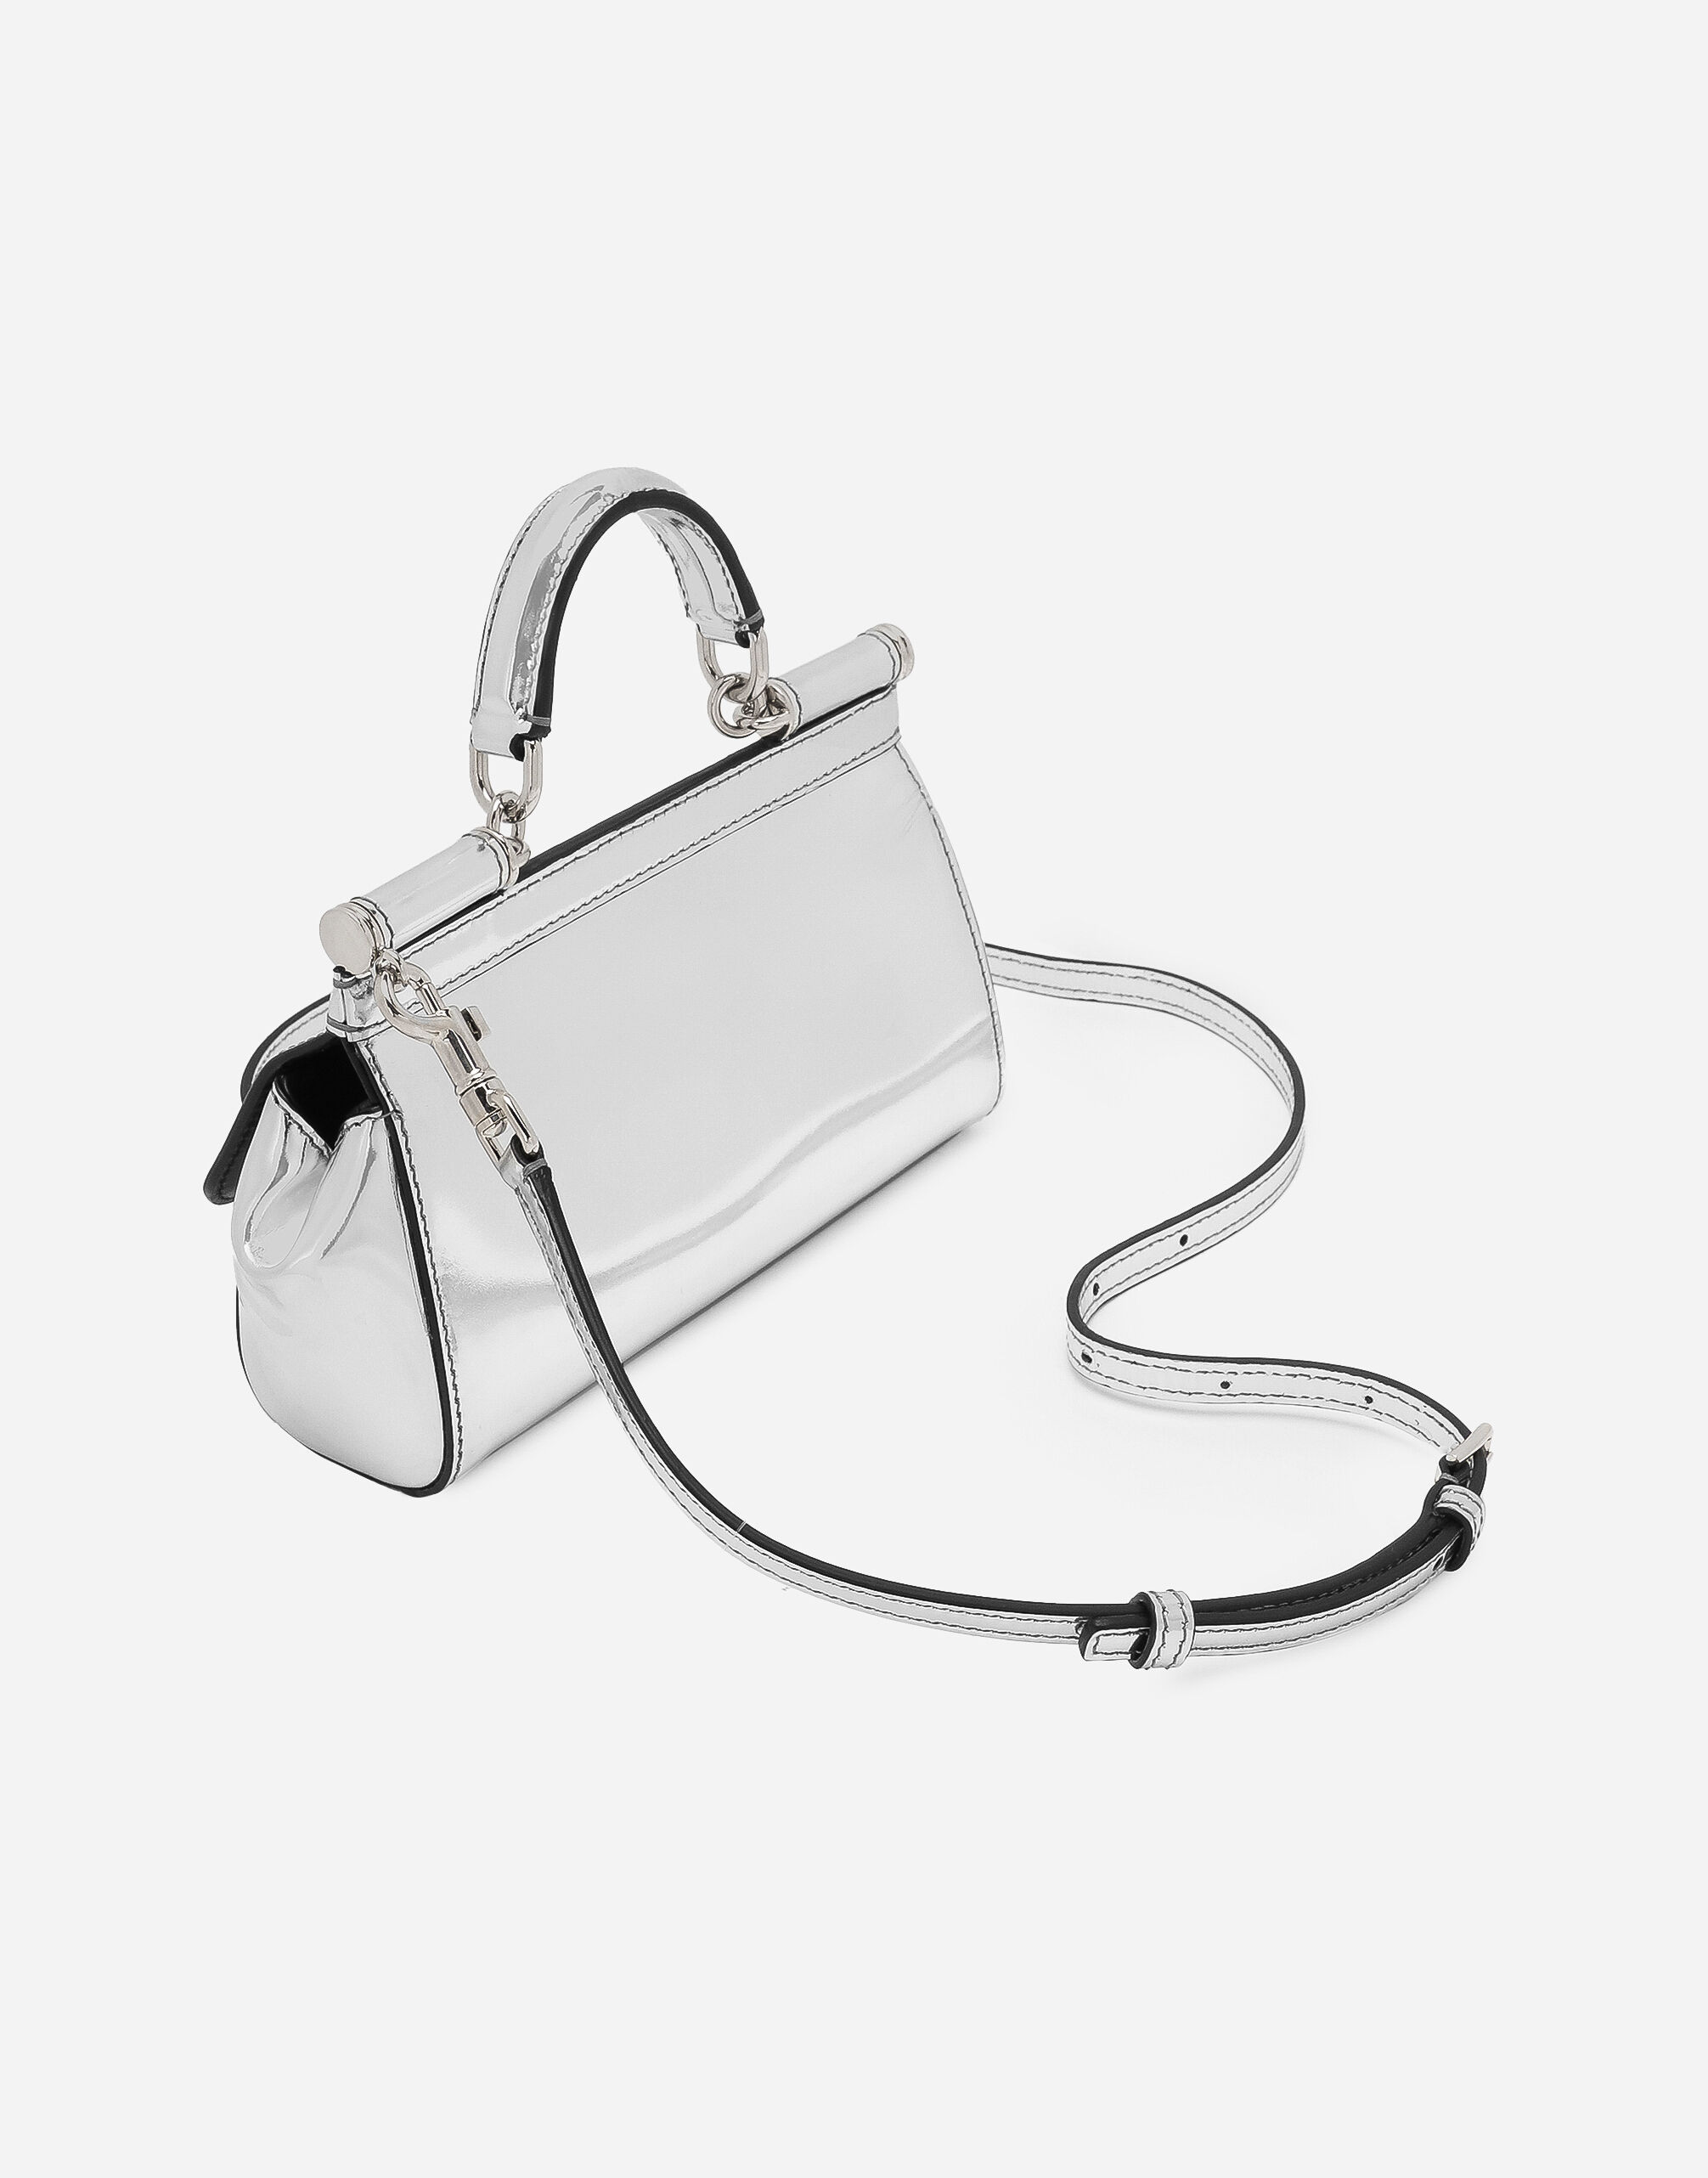 Small Sicily handbag in Silver for Women | Dolce&Gabbana®